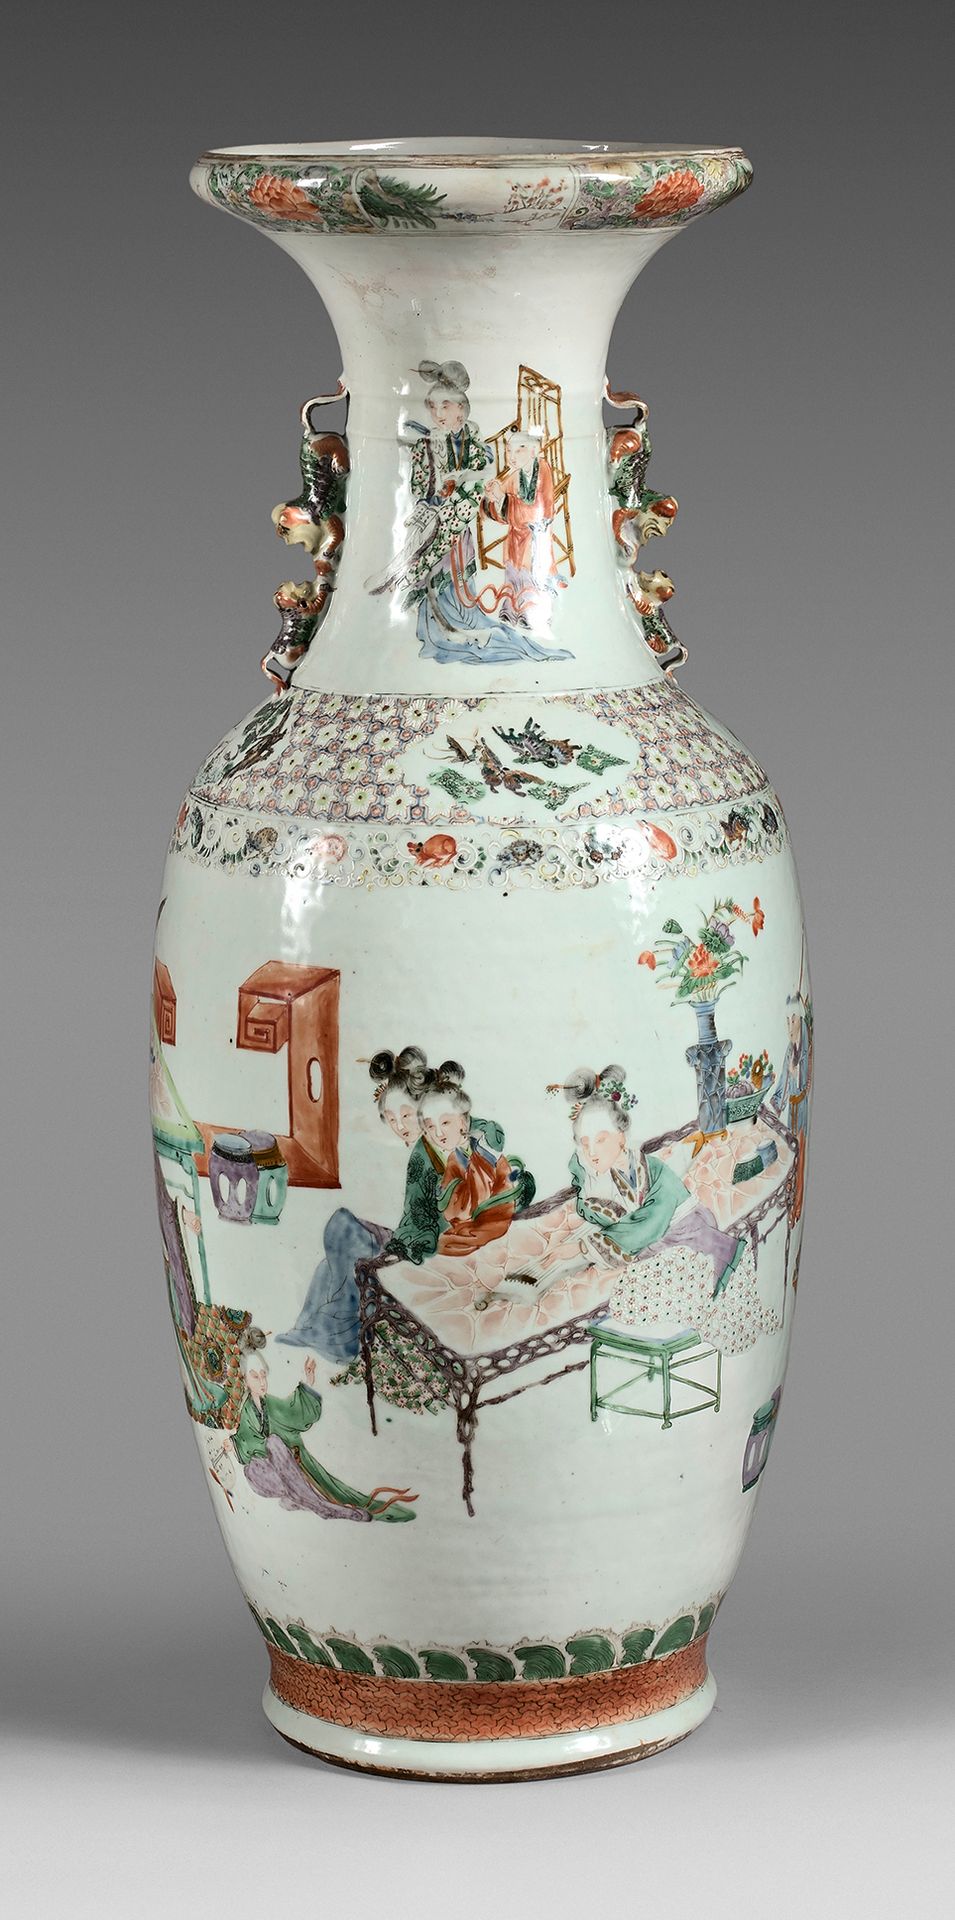 CHINE, Canton - Fin du XIXe siècle Balusterförmige Porzellanvase mit ausgestellt&hellip;